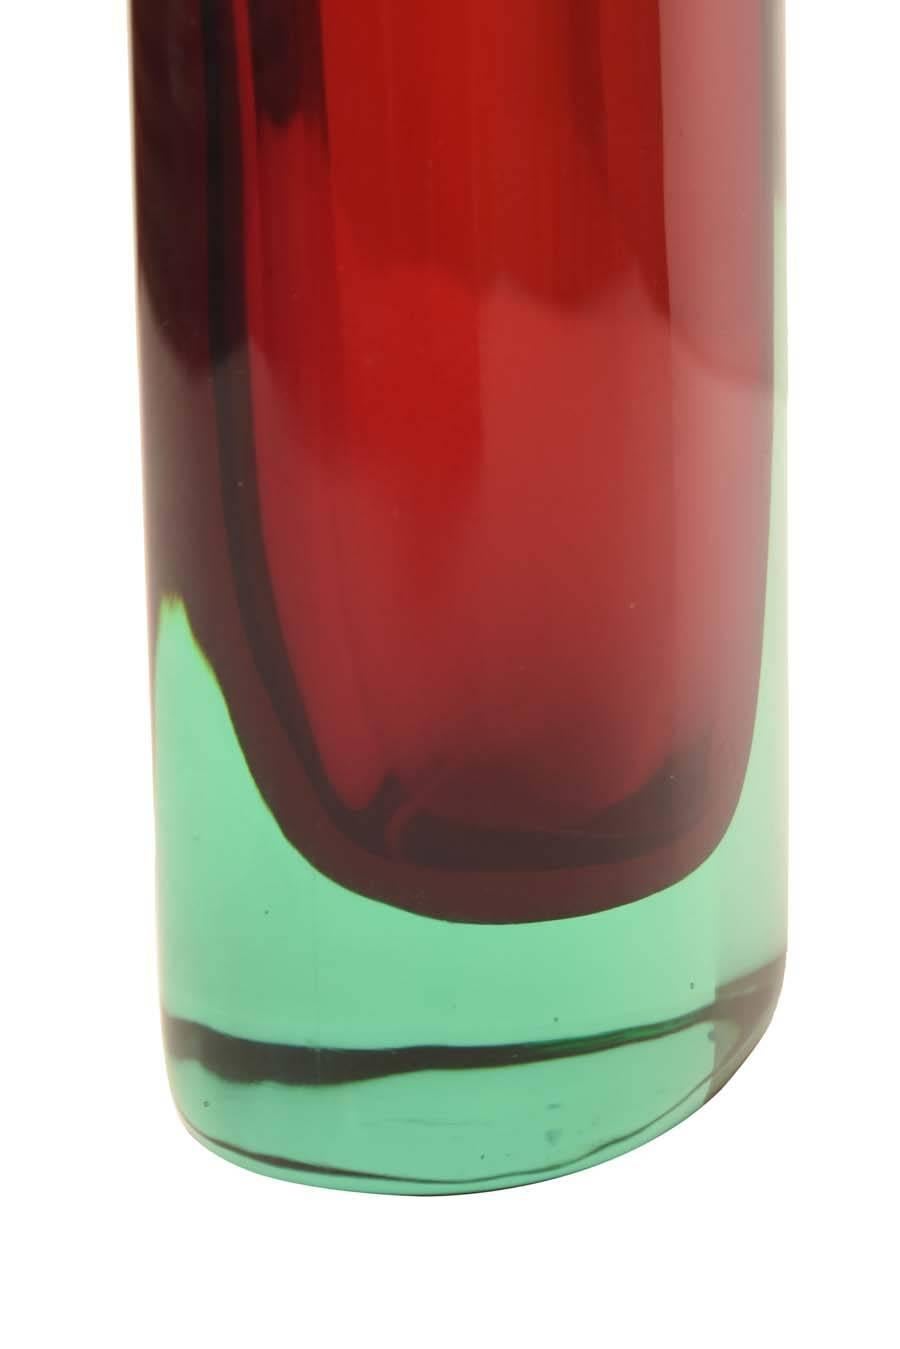 20th Century 1950s Sommerso Seguso Vetri d'Arte Vase, orange and green sommerso Murano glass